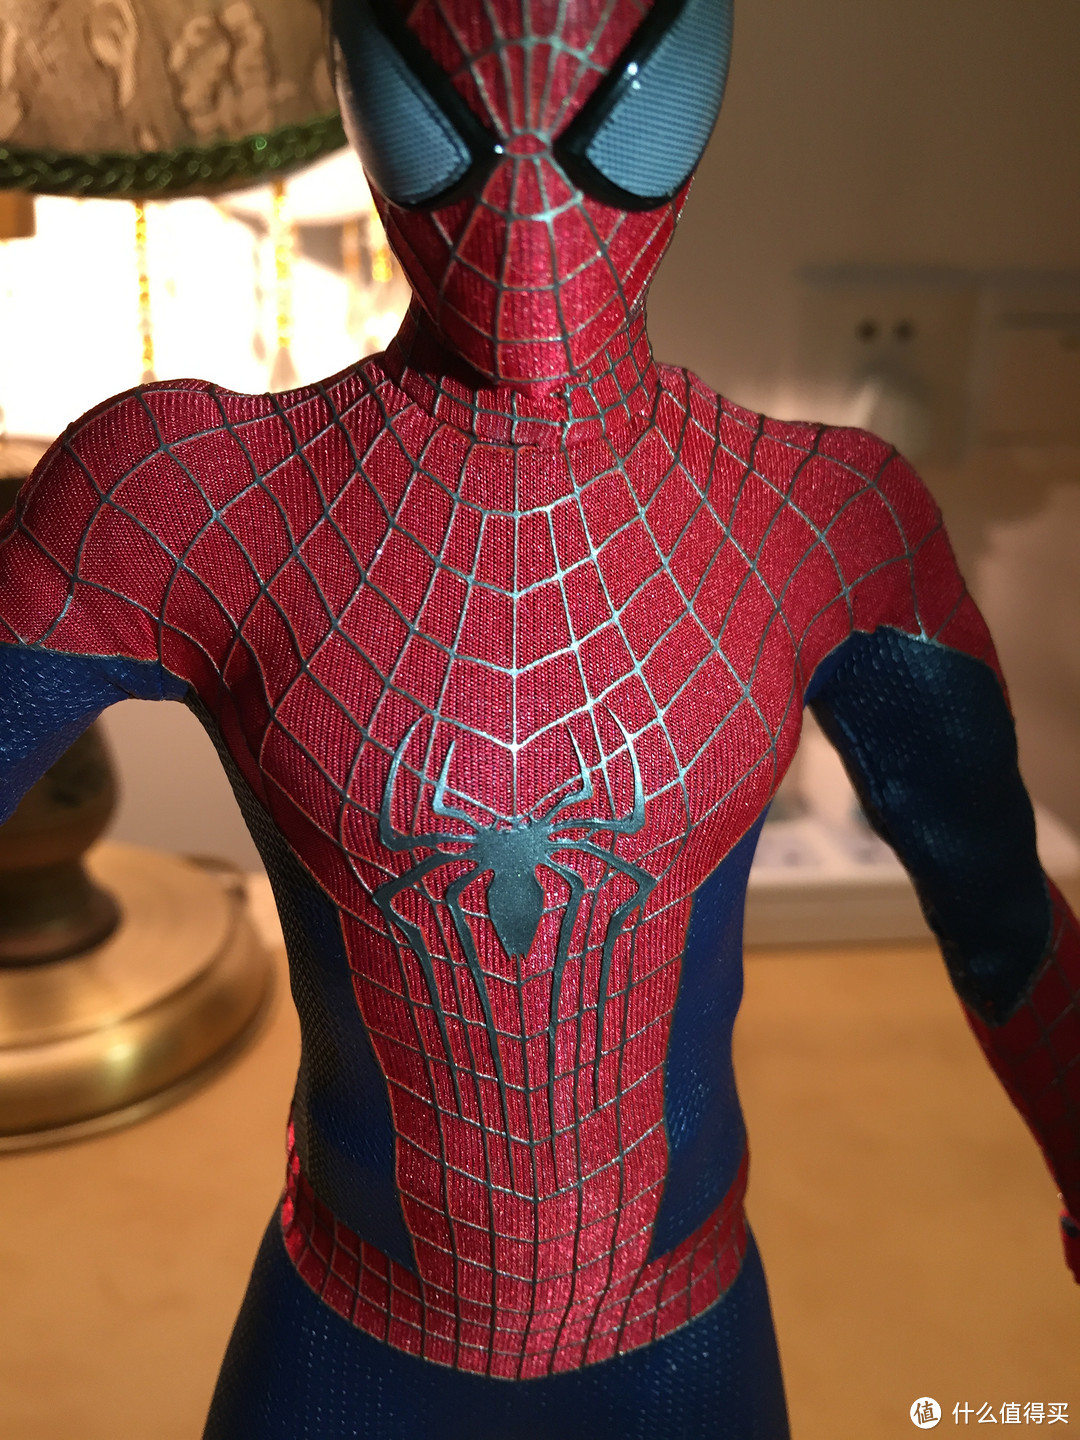 超凡 蜘蛛俠2 2.0 Spider-Man